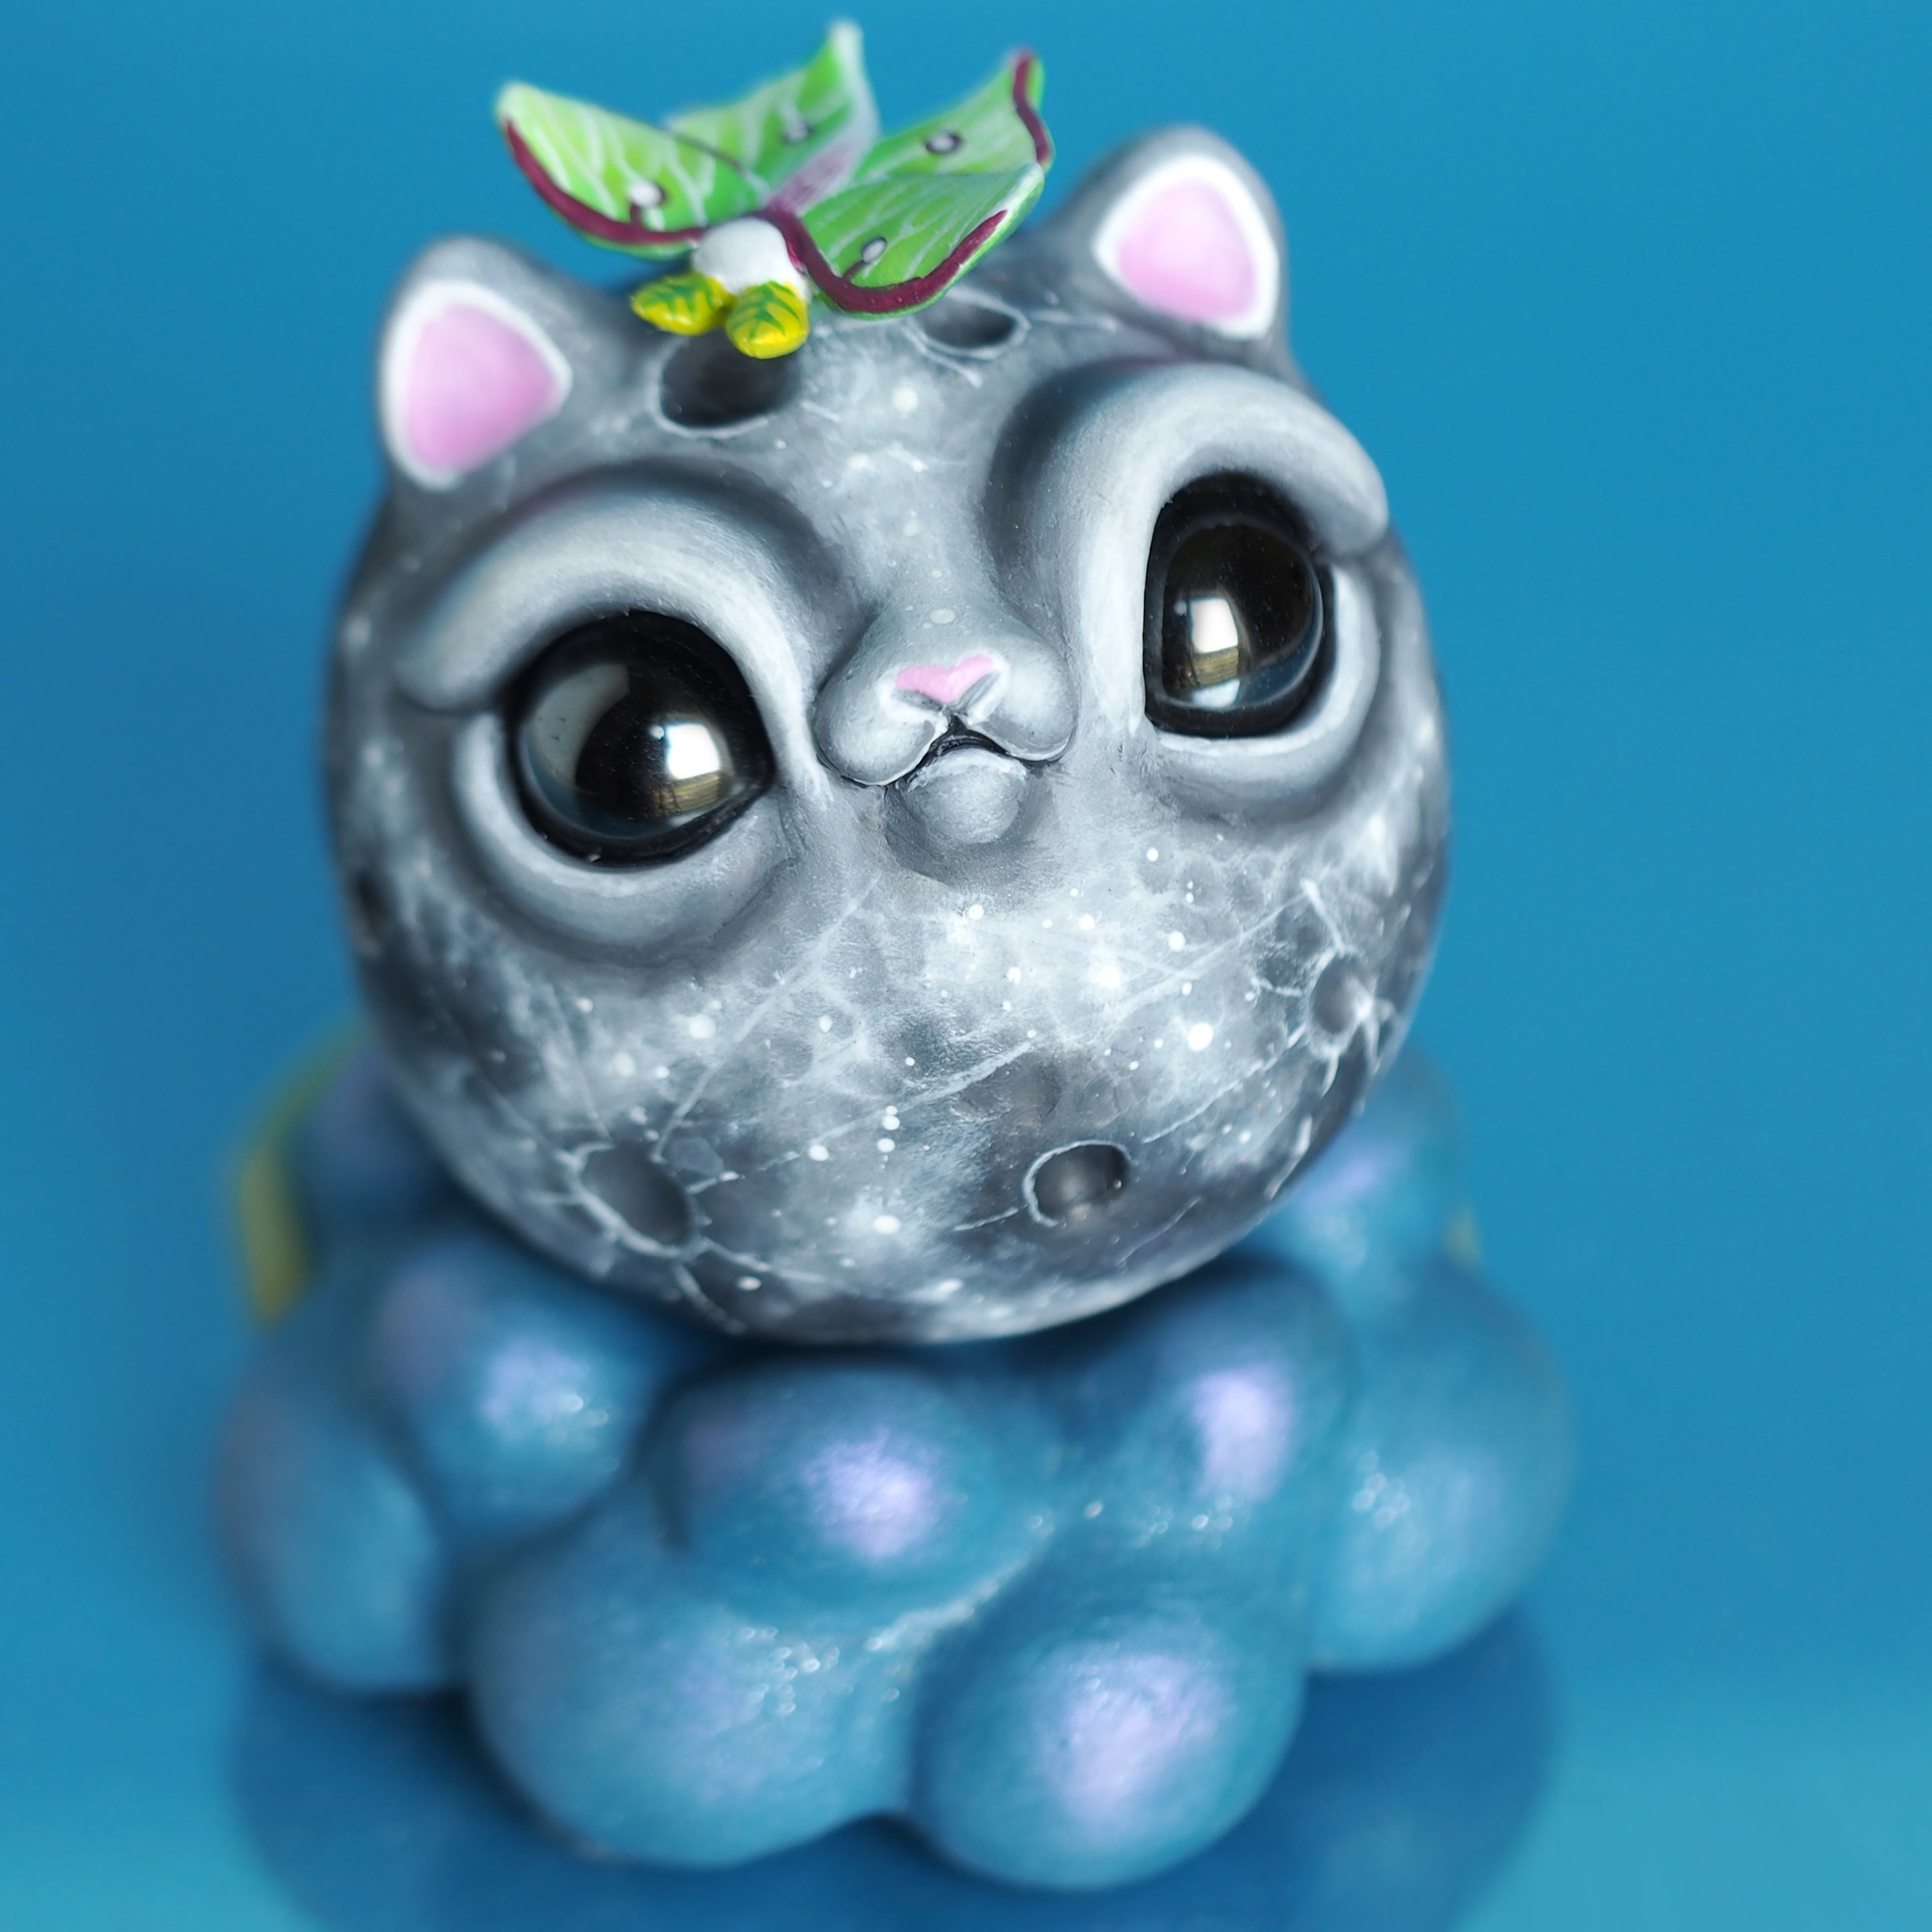 Moon Kitty - Creepy Kitty story set (Handmade polymer clay sculpture set) SHIPPING + INSURANCE